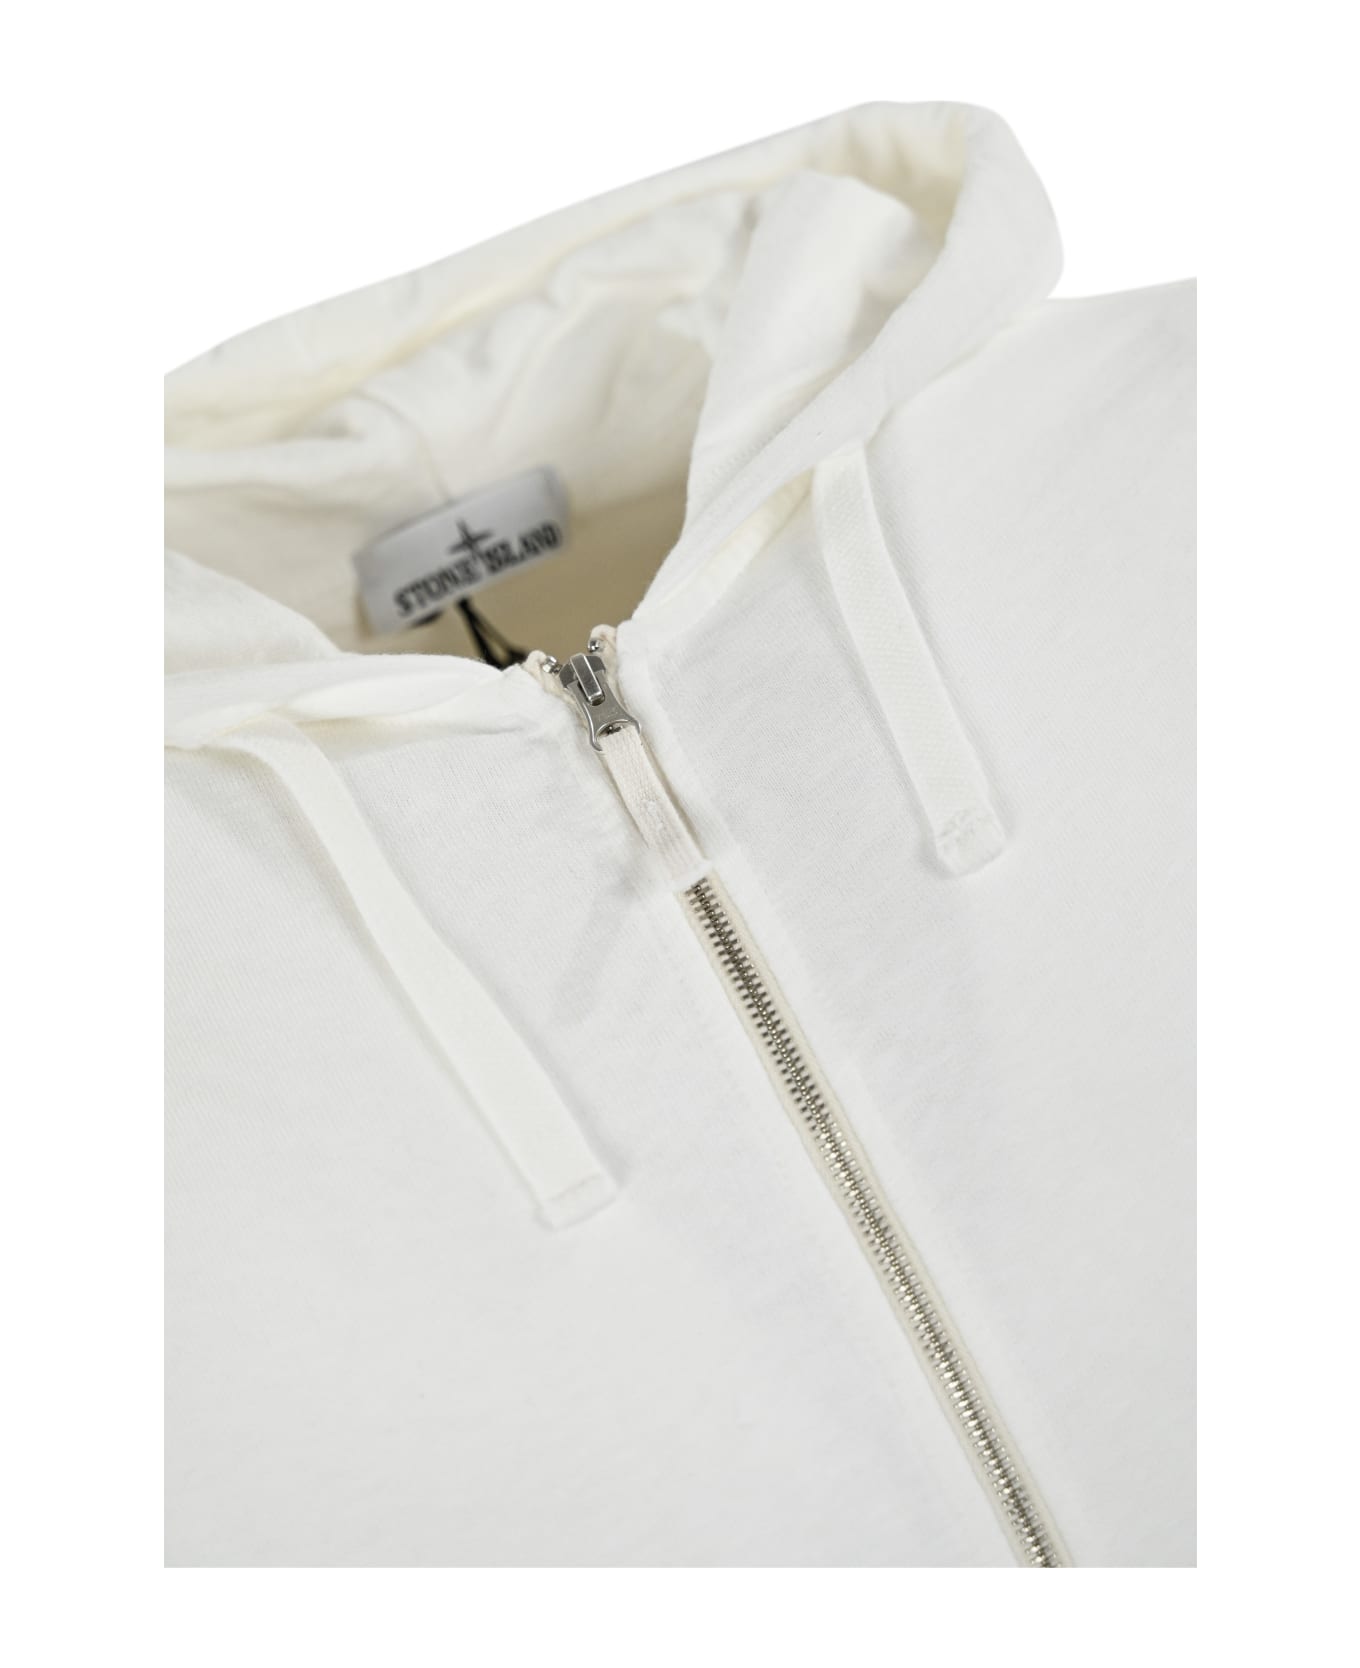 Stone Island Zip Sweatshirt 63160 Old Treatment - White